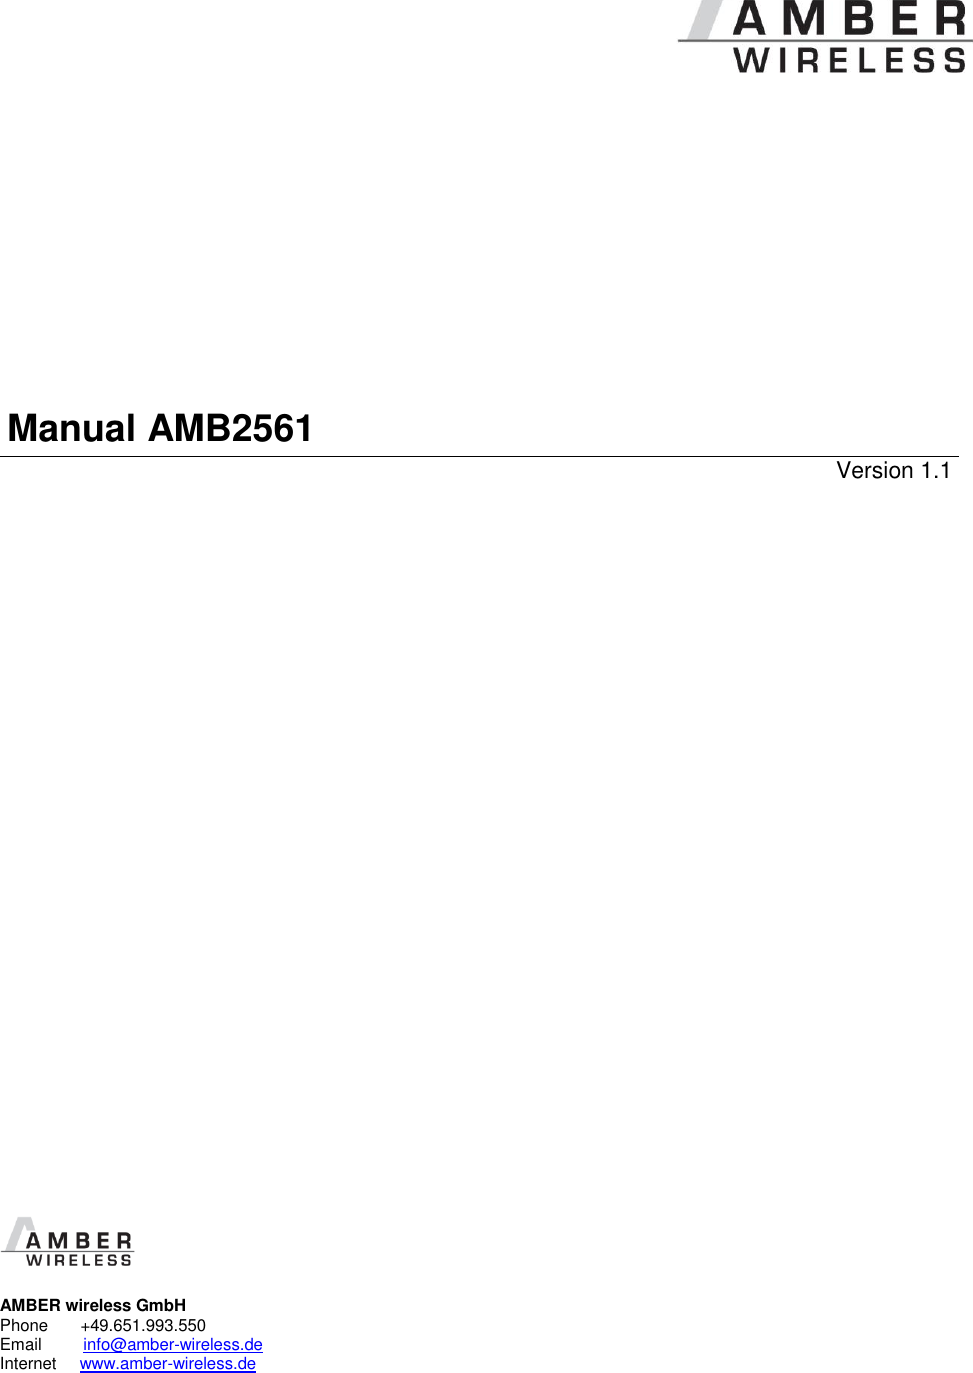                 Manual AMB2561 Version 1.1                                AMBER wireless GmbH Phone       +49.651.993.550  Email         info@amber-wireless.de Internet     www.amber-wireless.de      